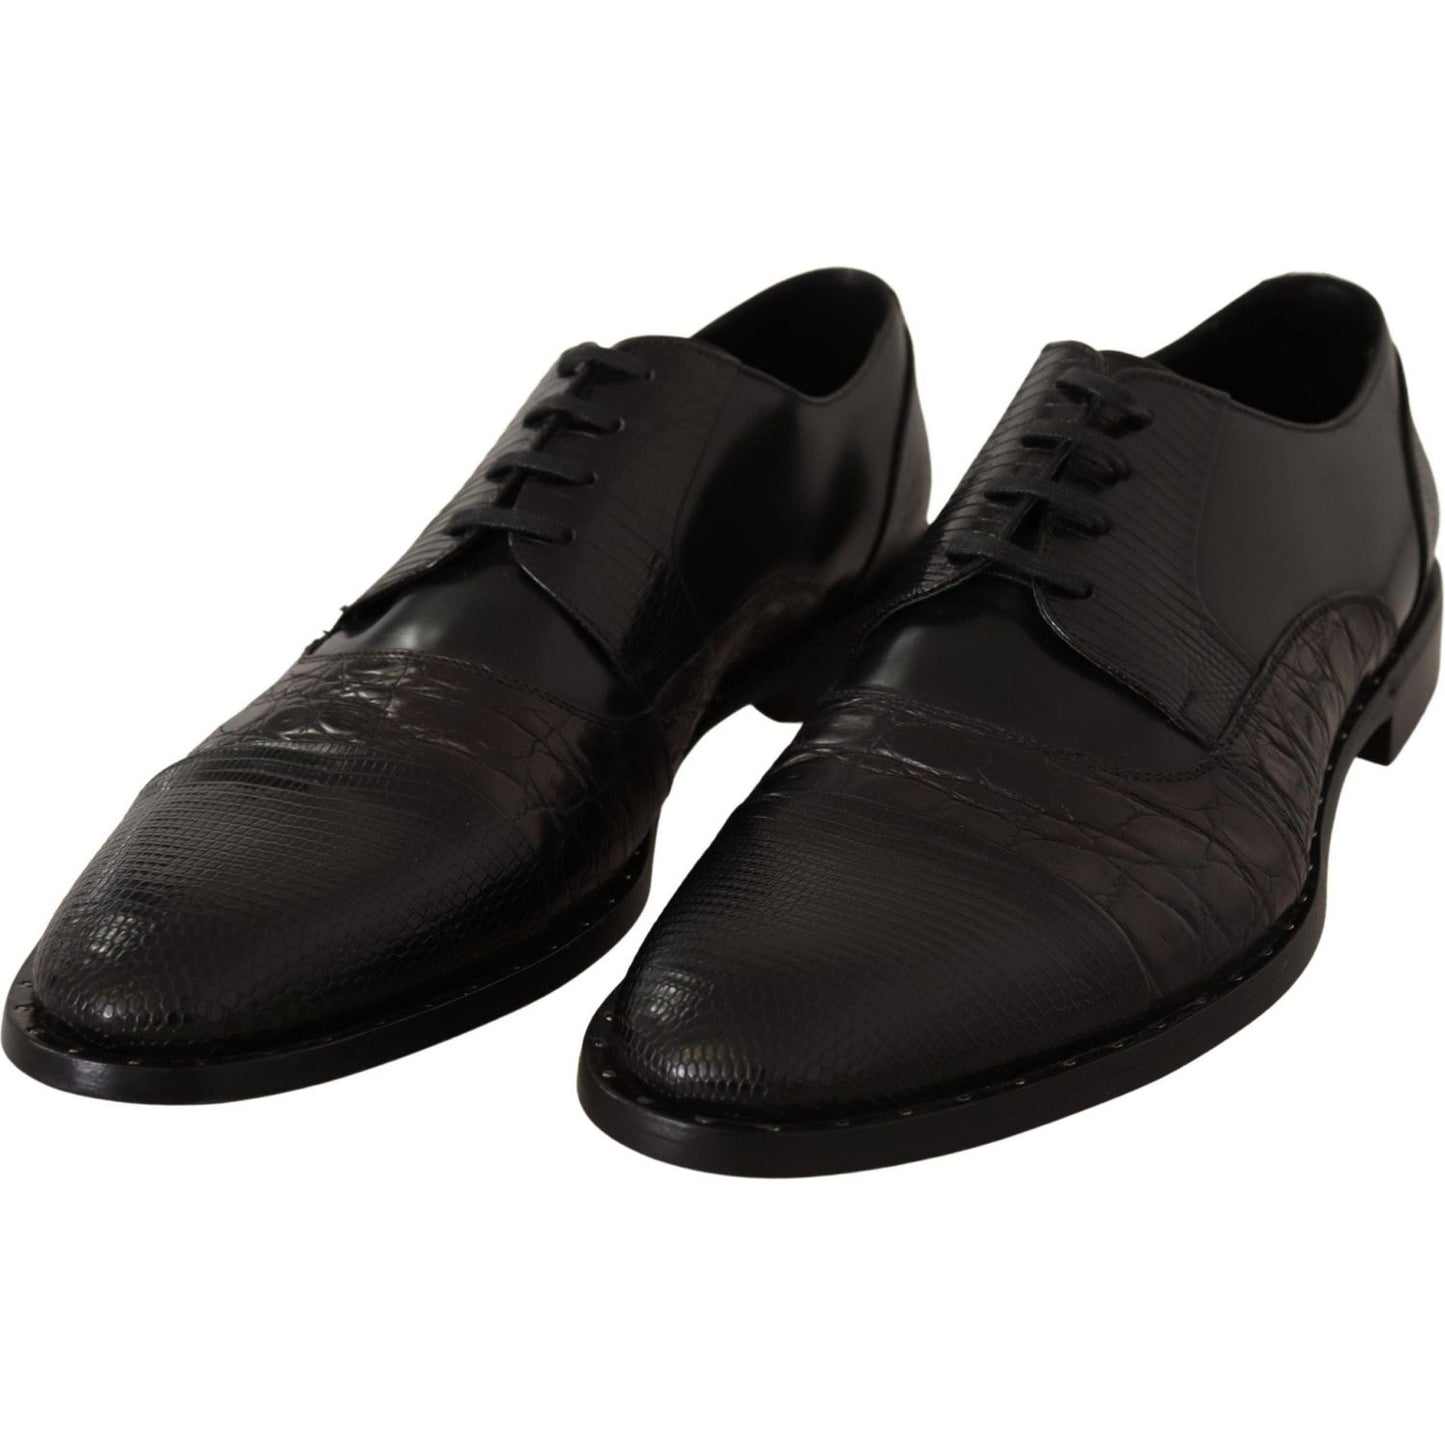 Dolce & Gabbana Elegant Black Derby Oxford Wingtips black-leather-exotic-skins-formal-shoes IMG_5309-scaled-9f5577fb-12c.jpg